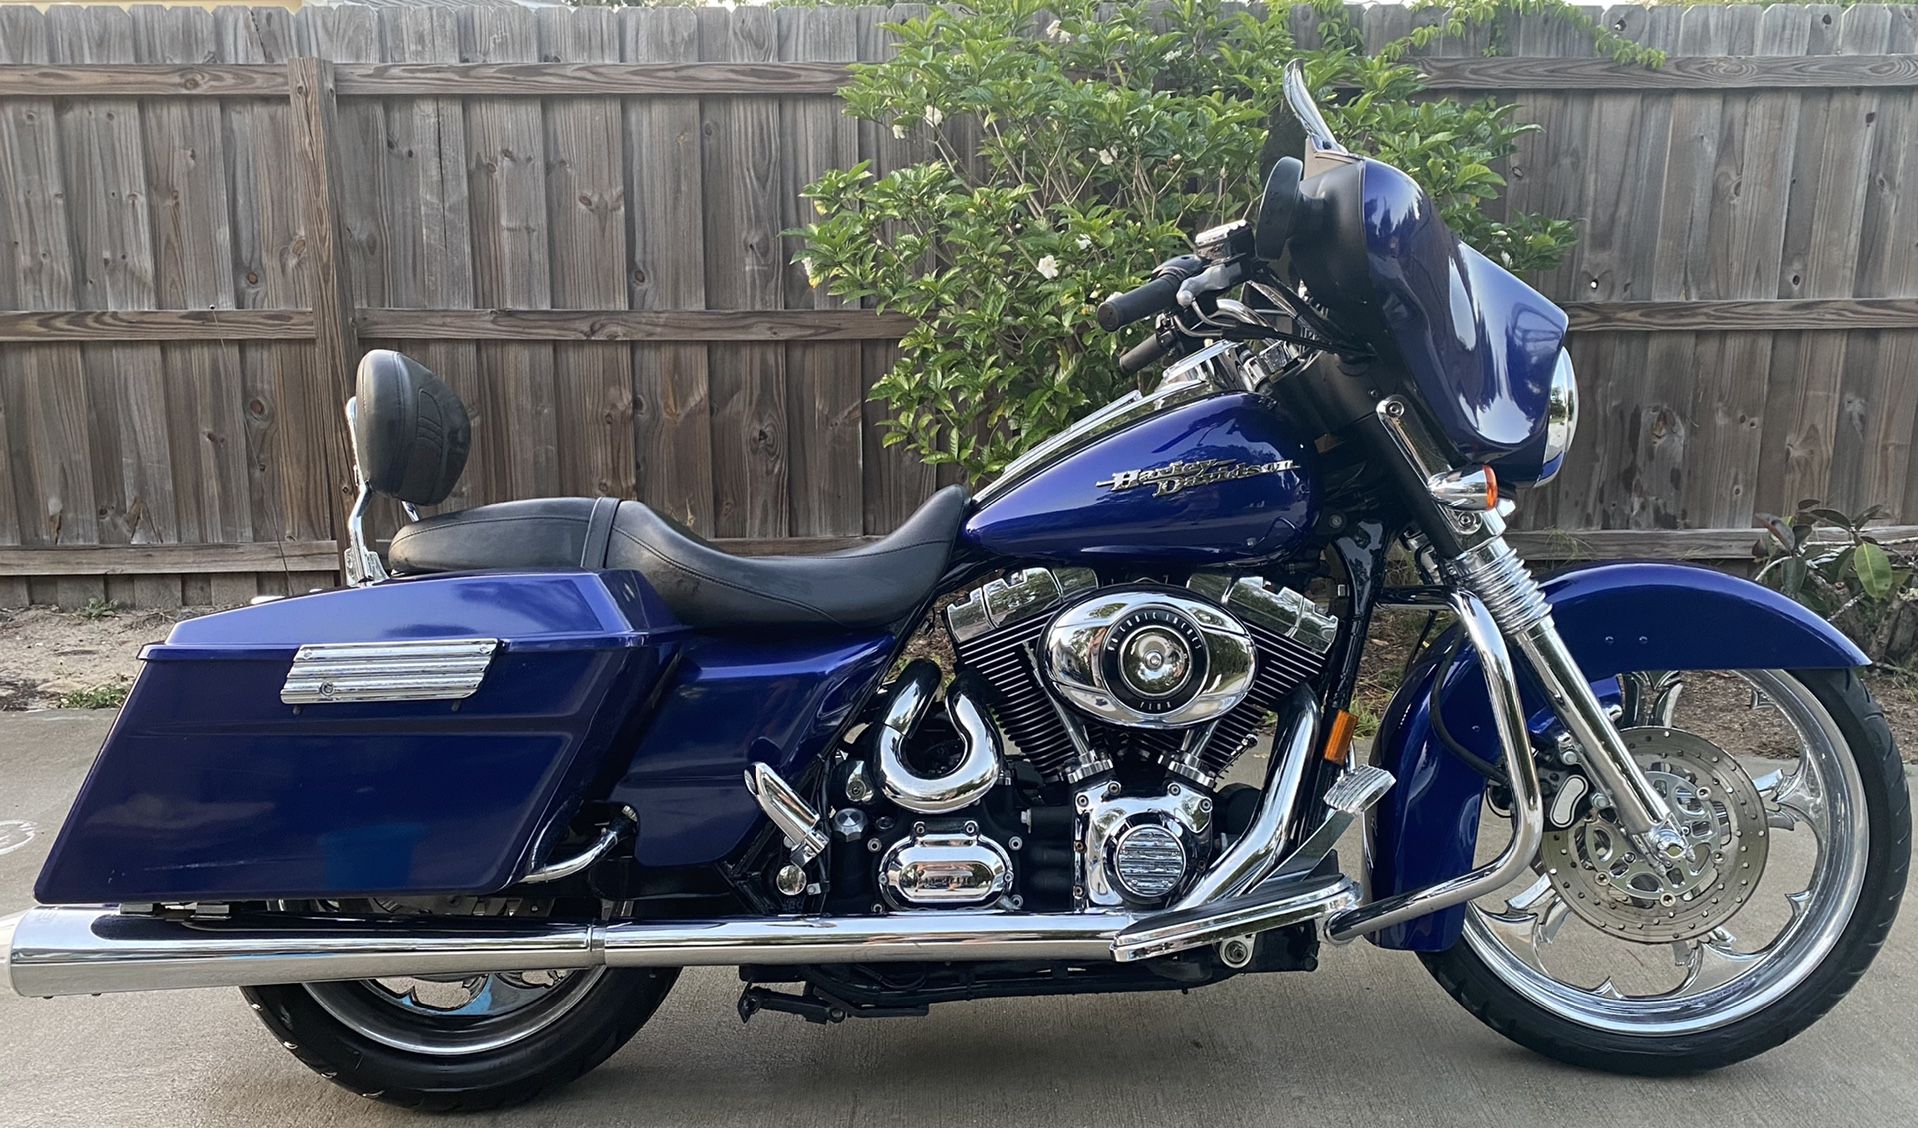 2007 Harley-Davidson Street Glide Motorcycle dark blue 7405 miles 